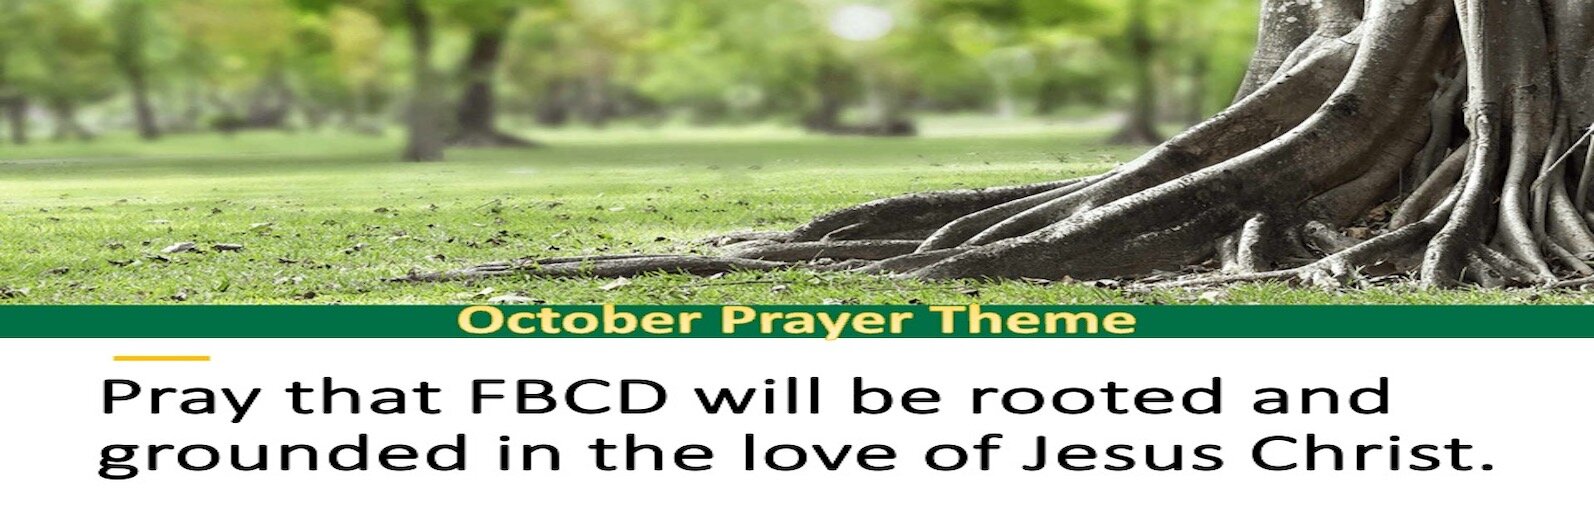 /images/r/october-prayer-theme/c1594x510/october-prayer-theme.jpg